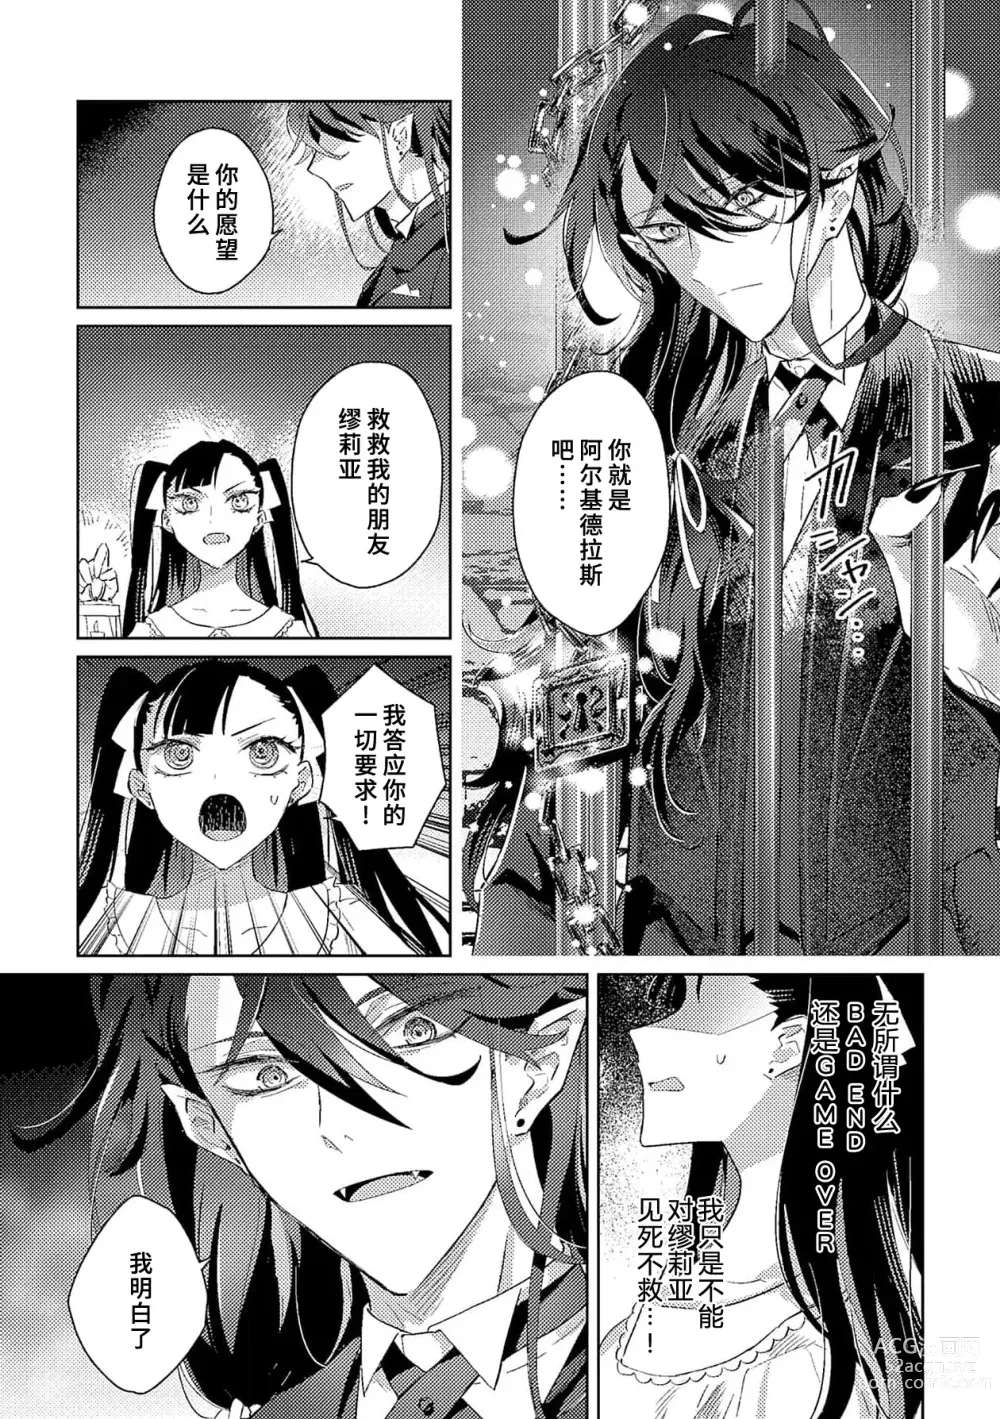 Page 12 of manga 身为恶役千金，堕落于魔界王子身下这条路线真的可以有？ 1-7